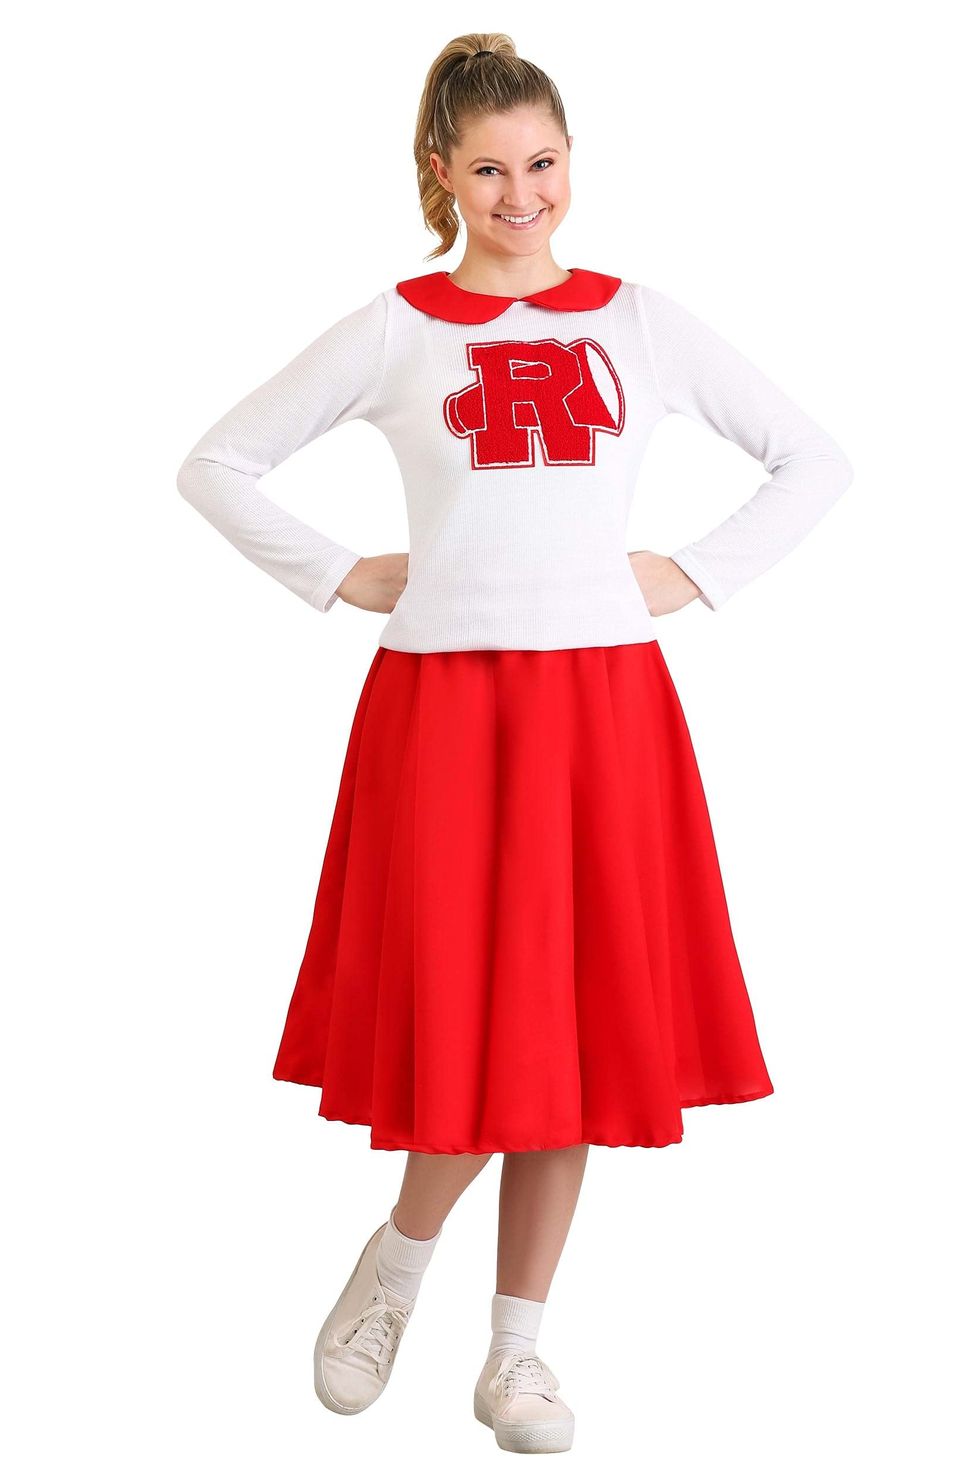 Rydell High Cheerleader Costume